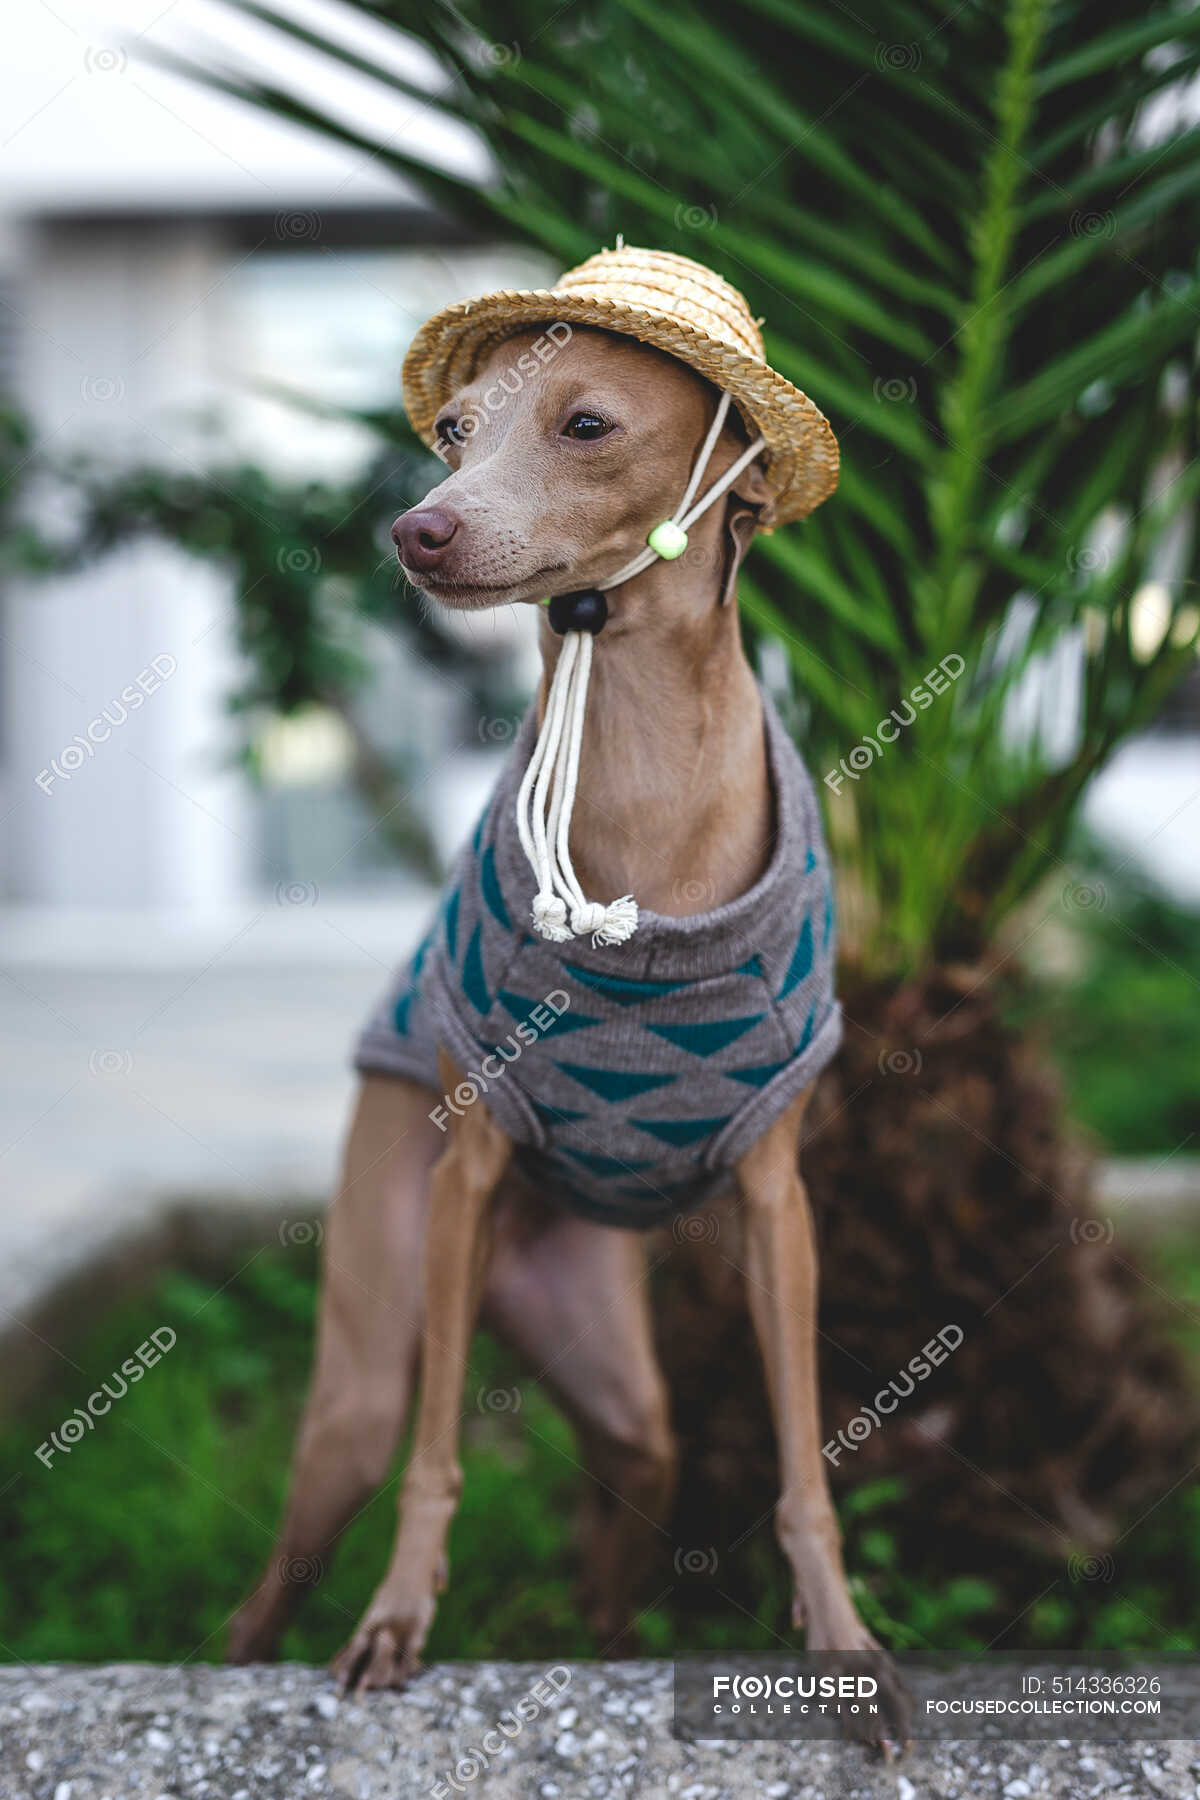 Italian Greyhound dog standing with wool sweater and hat gazing away — greenery - Stock | #514336326